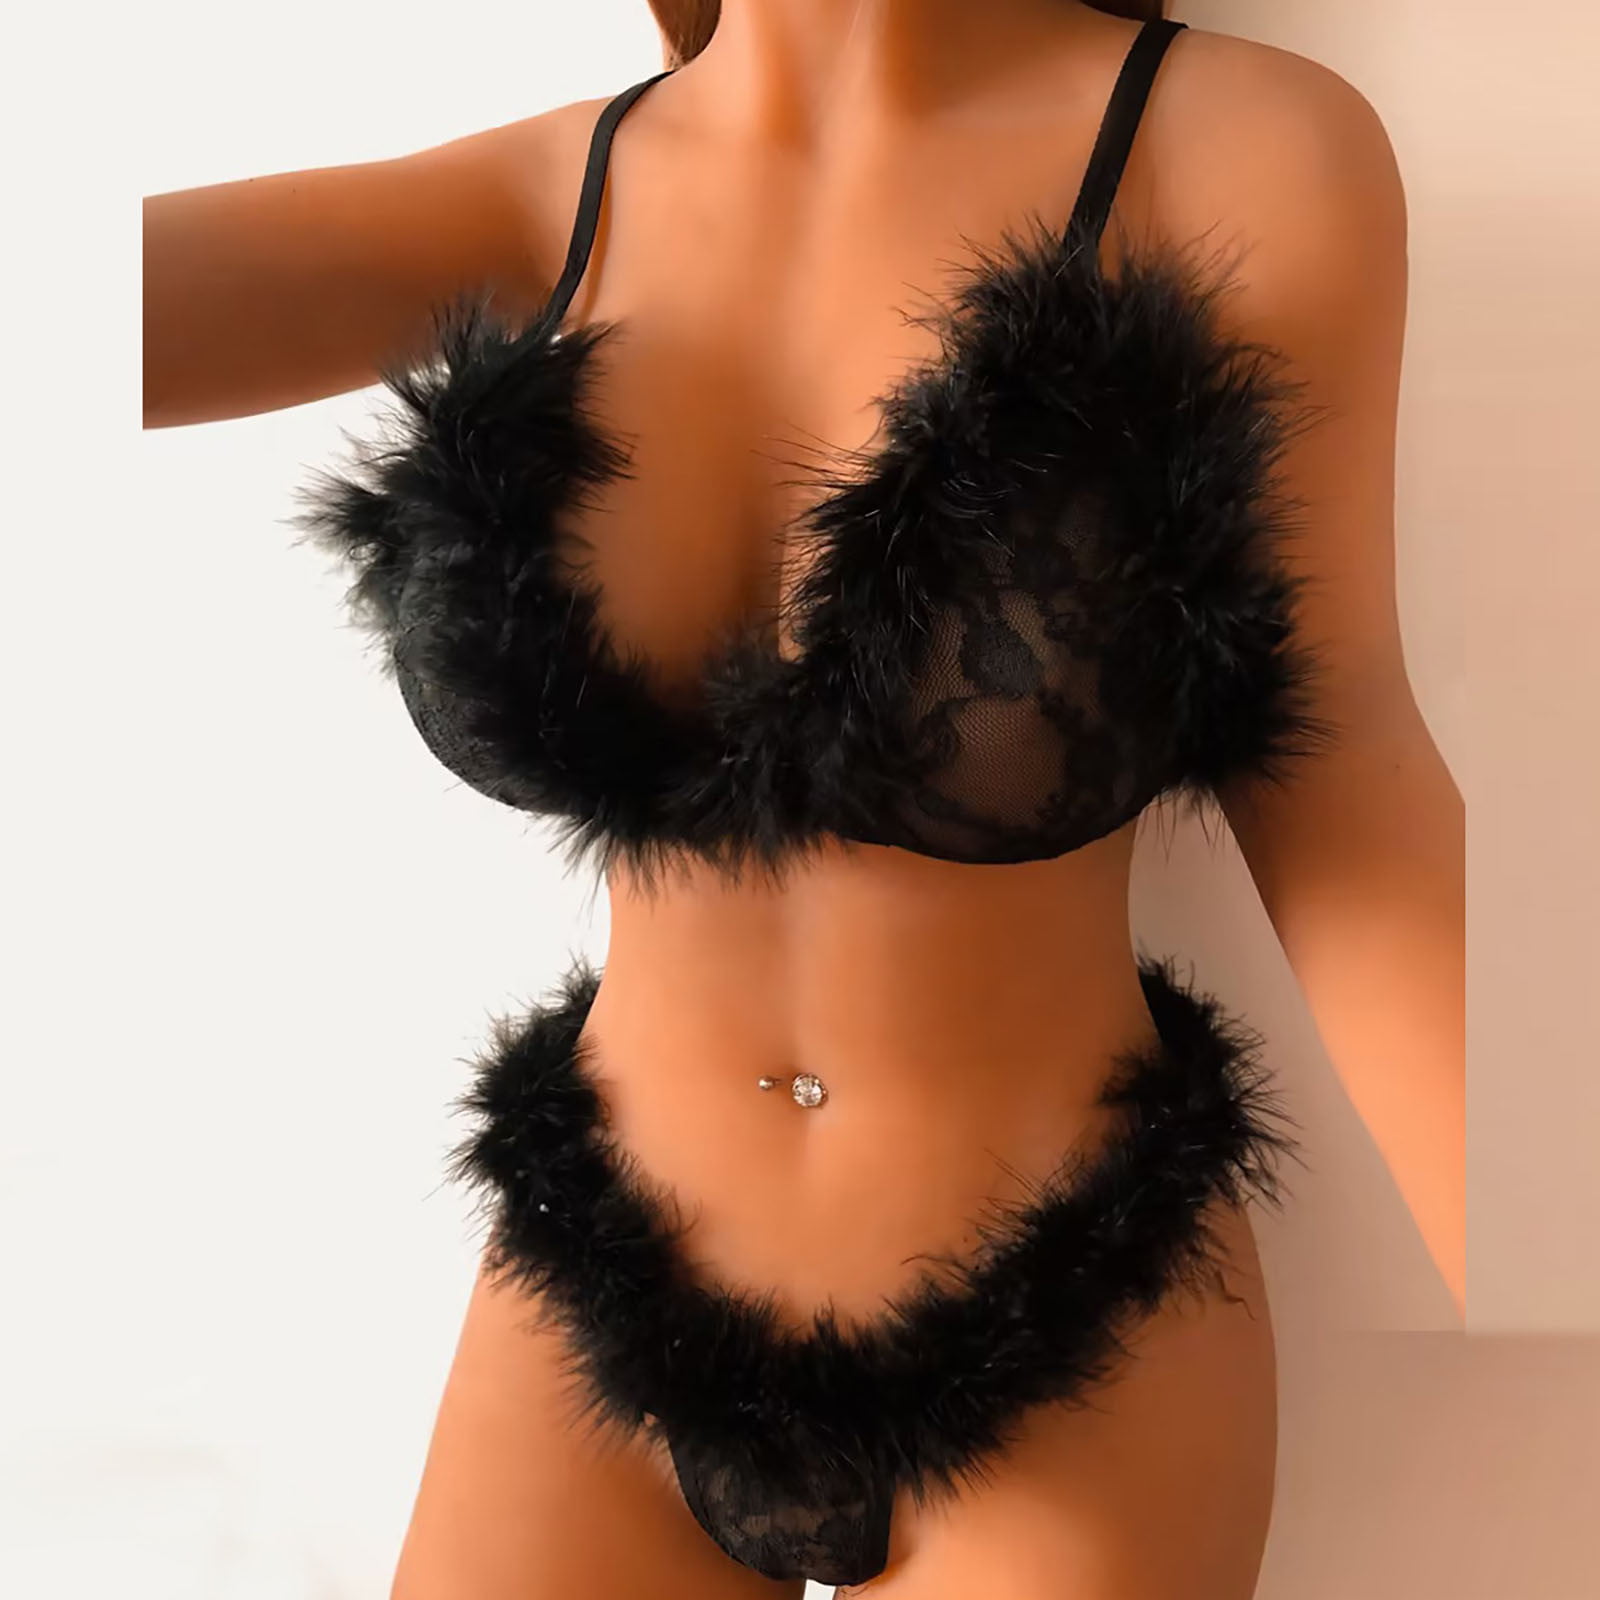 Xysaqa Women's Faux Fur' Lingerie Sets Lace Mesh V Neck Bra and Thong Panty  Set 